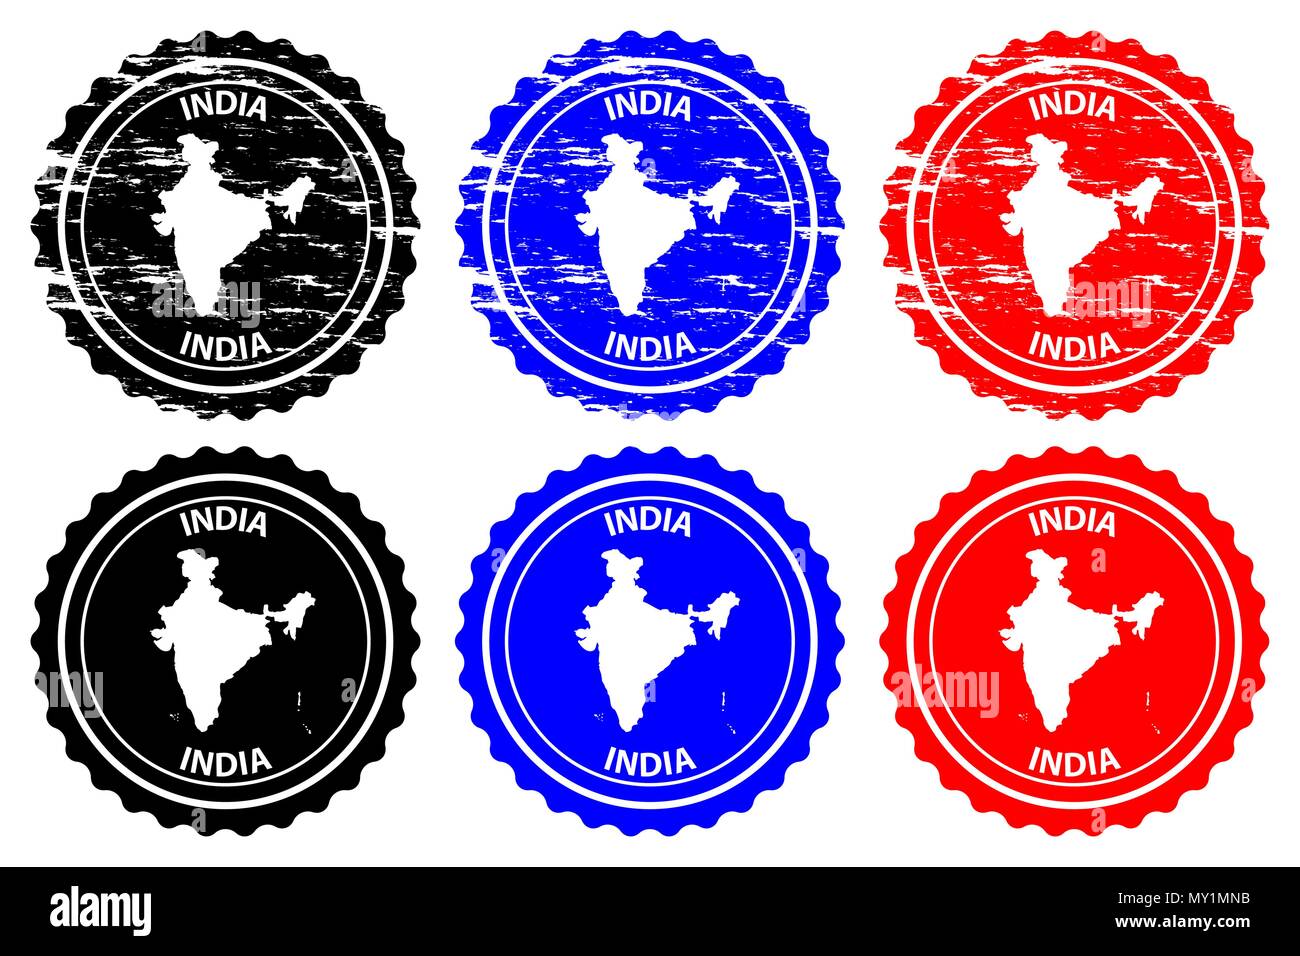 Indien - Stempel - Vektor, Republik Indien Karte Muster - Aufkleber - Schwarz, Blau und Rot Stock Vektor